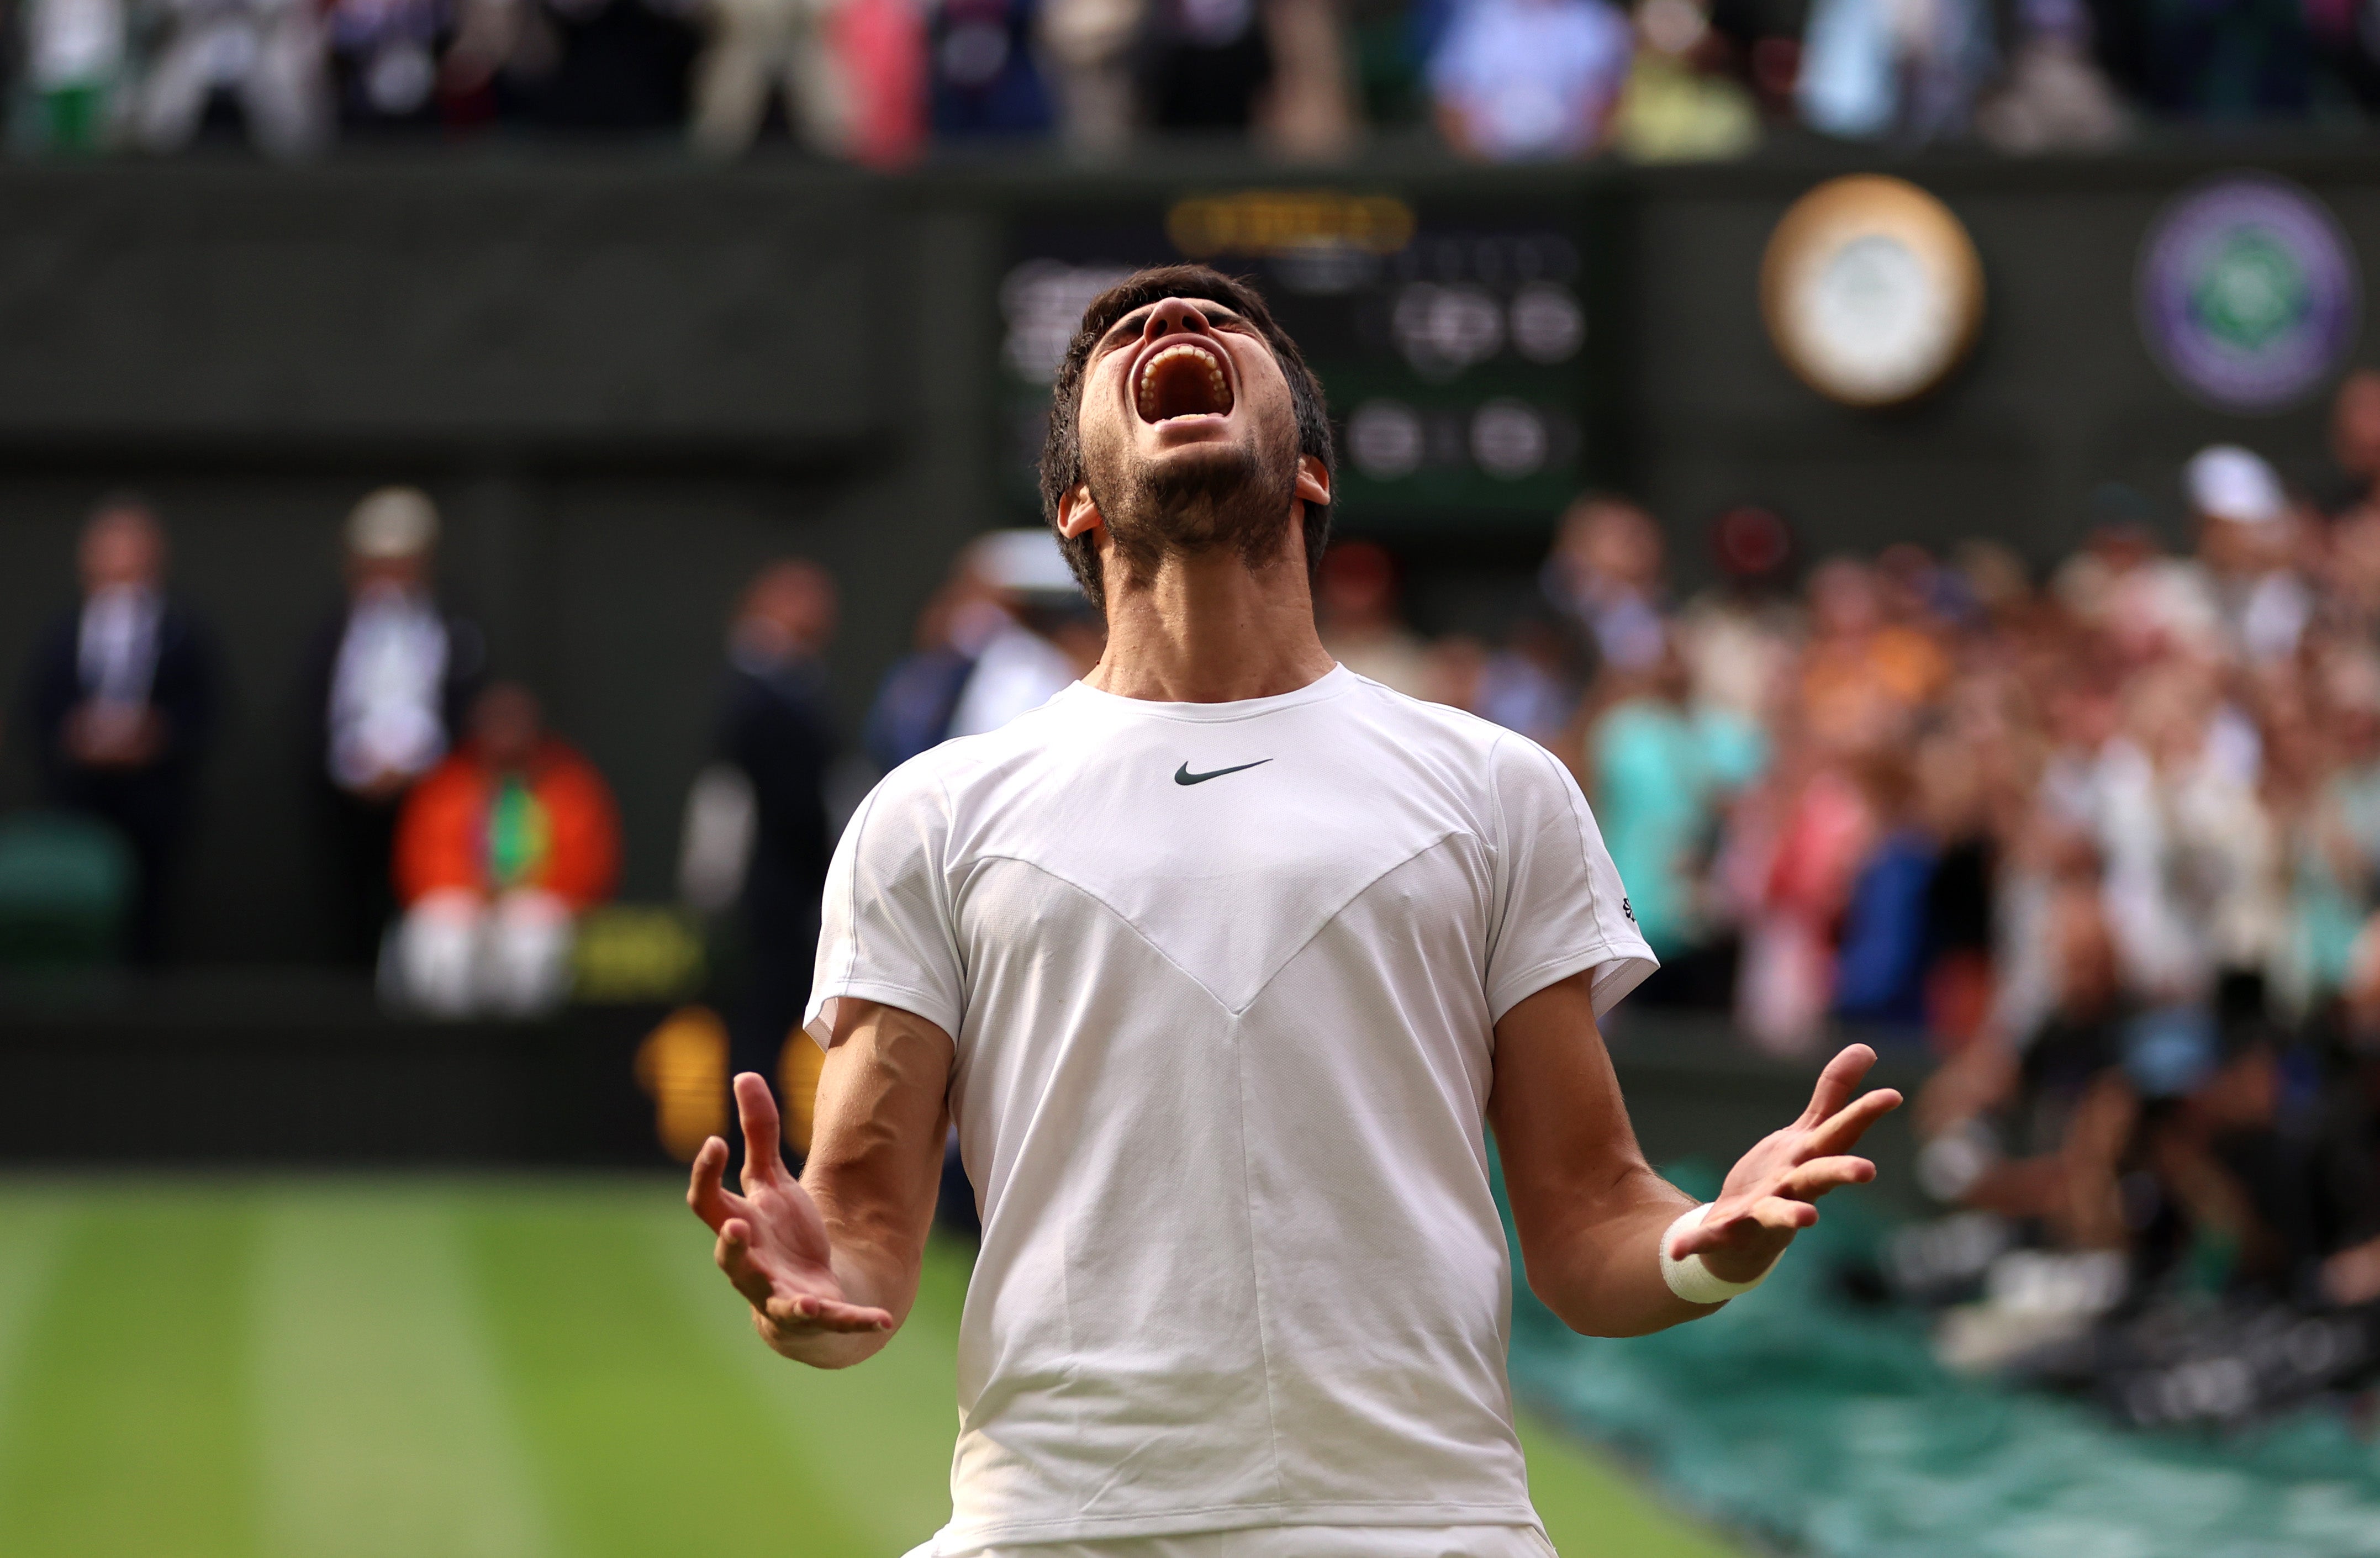 Carlos Alcaraz defeated Novak Djokovic in five sets to win Wimbledon